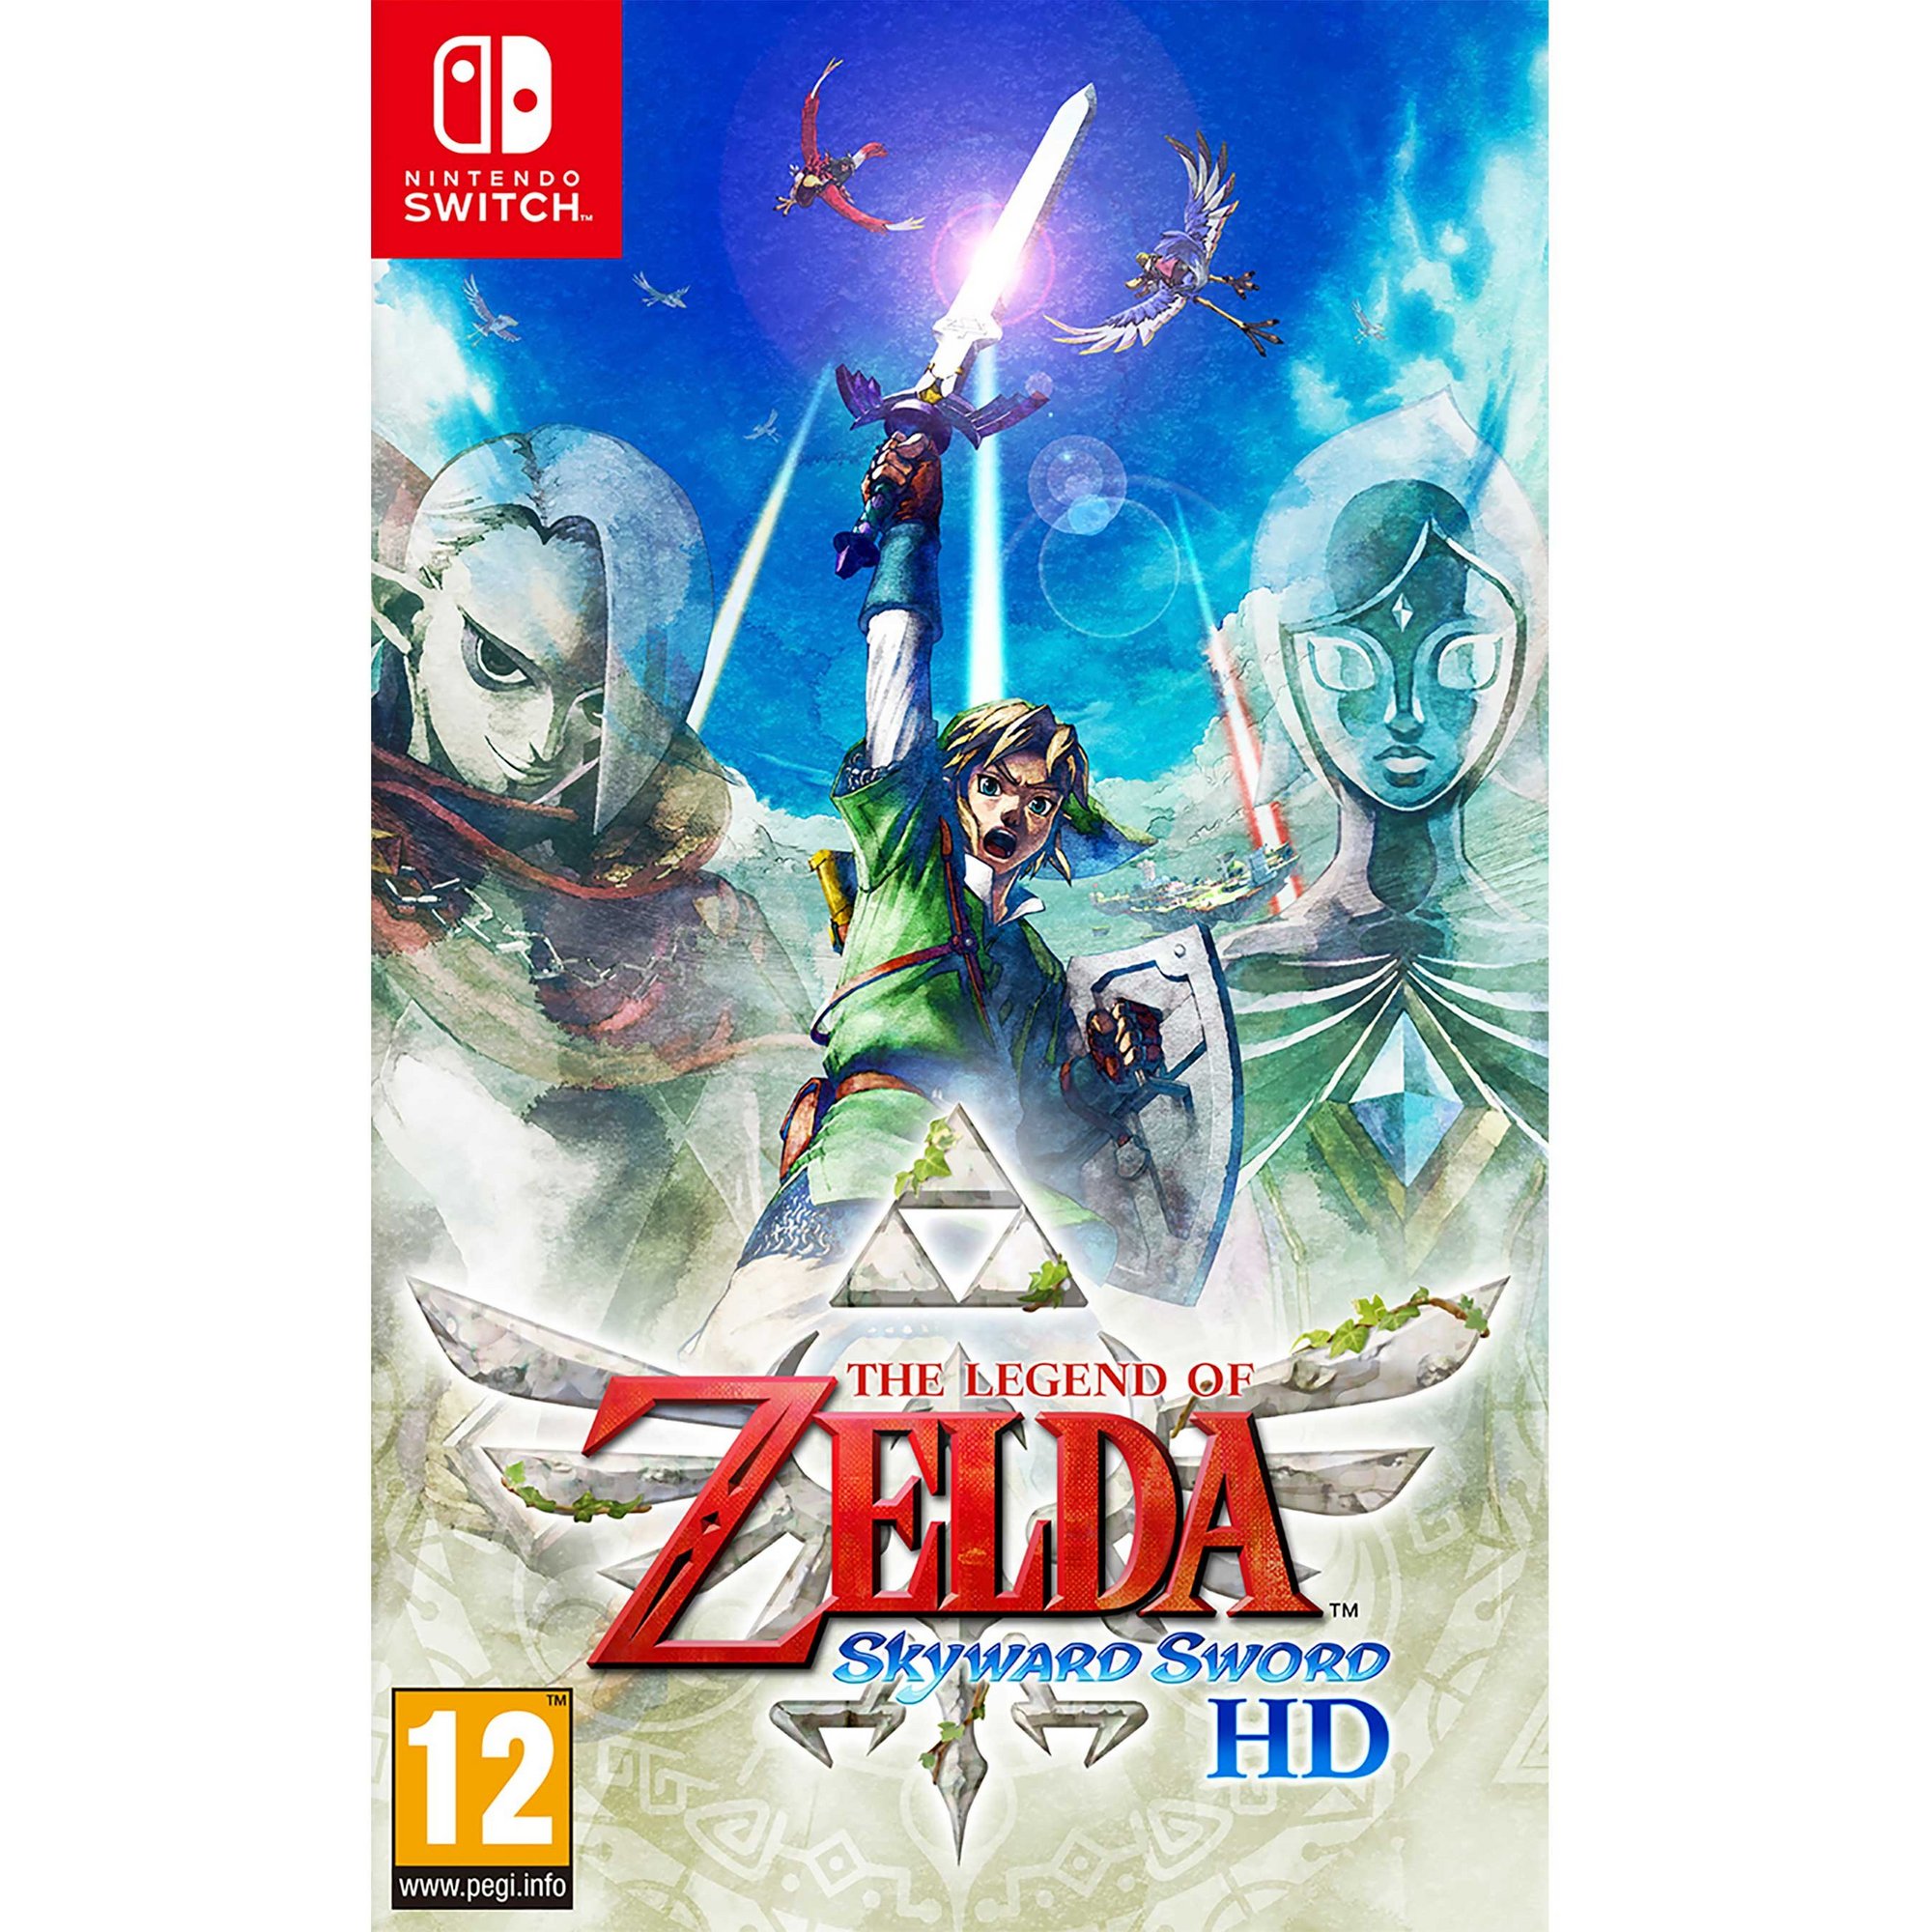 Nintendo Switch: The Legend of Zelda Skyward Sword HD